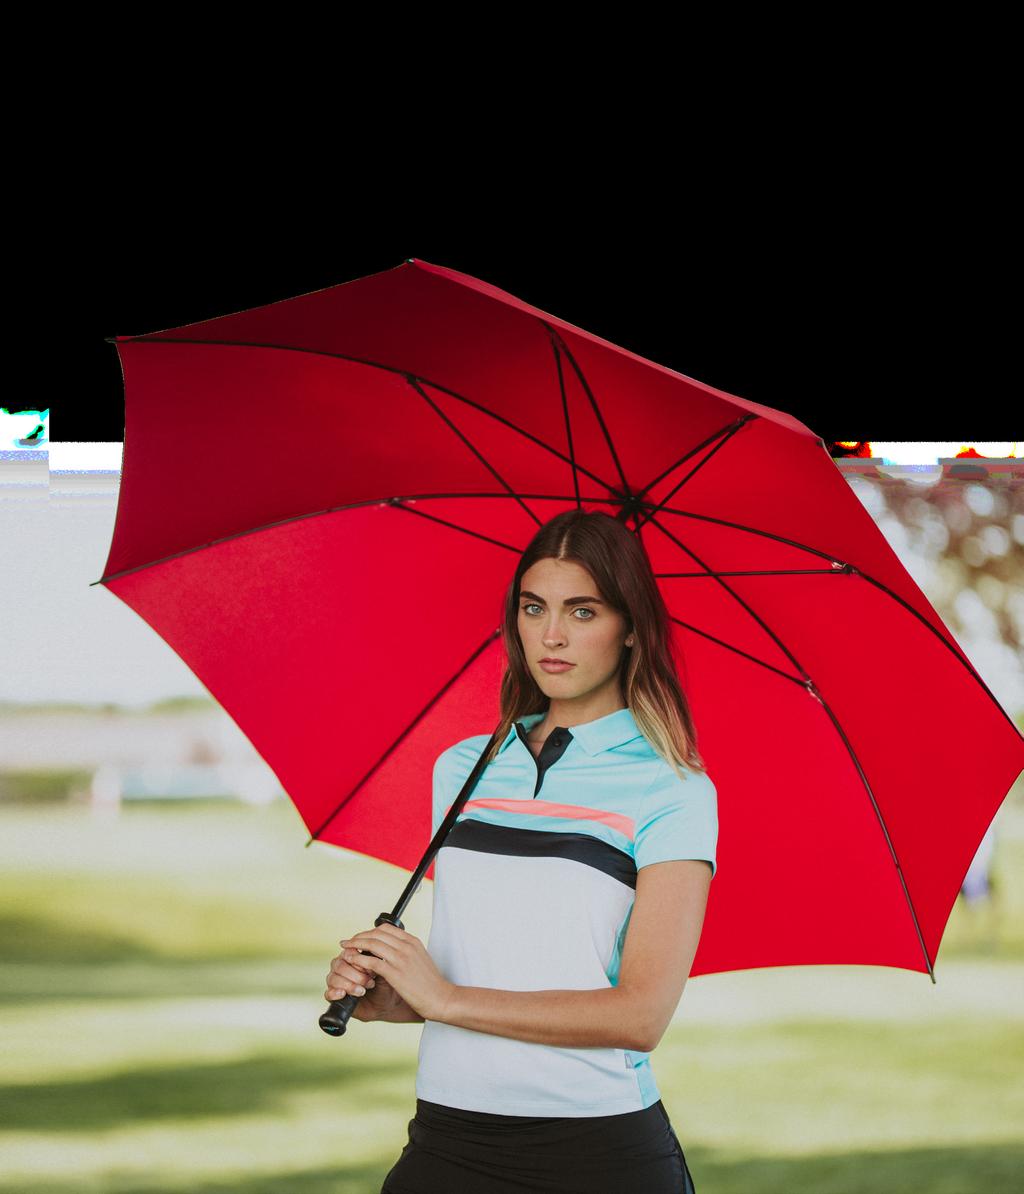 #5800 MAELSTROM SINGLE CANOPY UMBRELLAS Haas-Jordan single canopy umbrellas